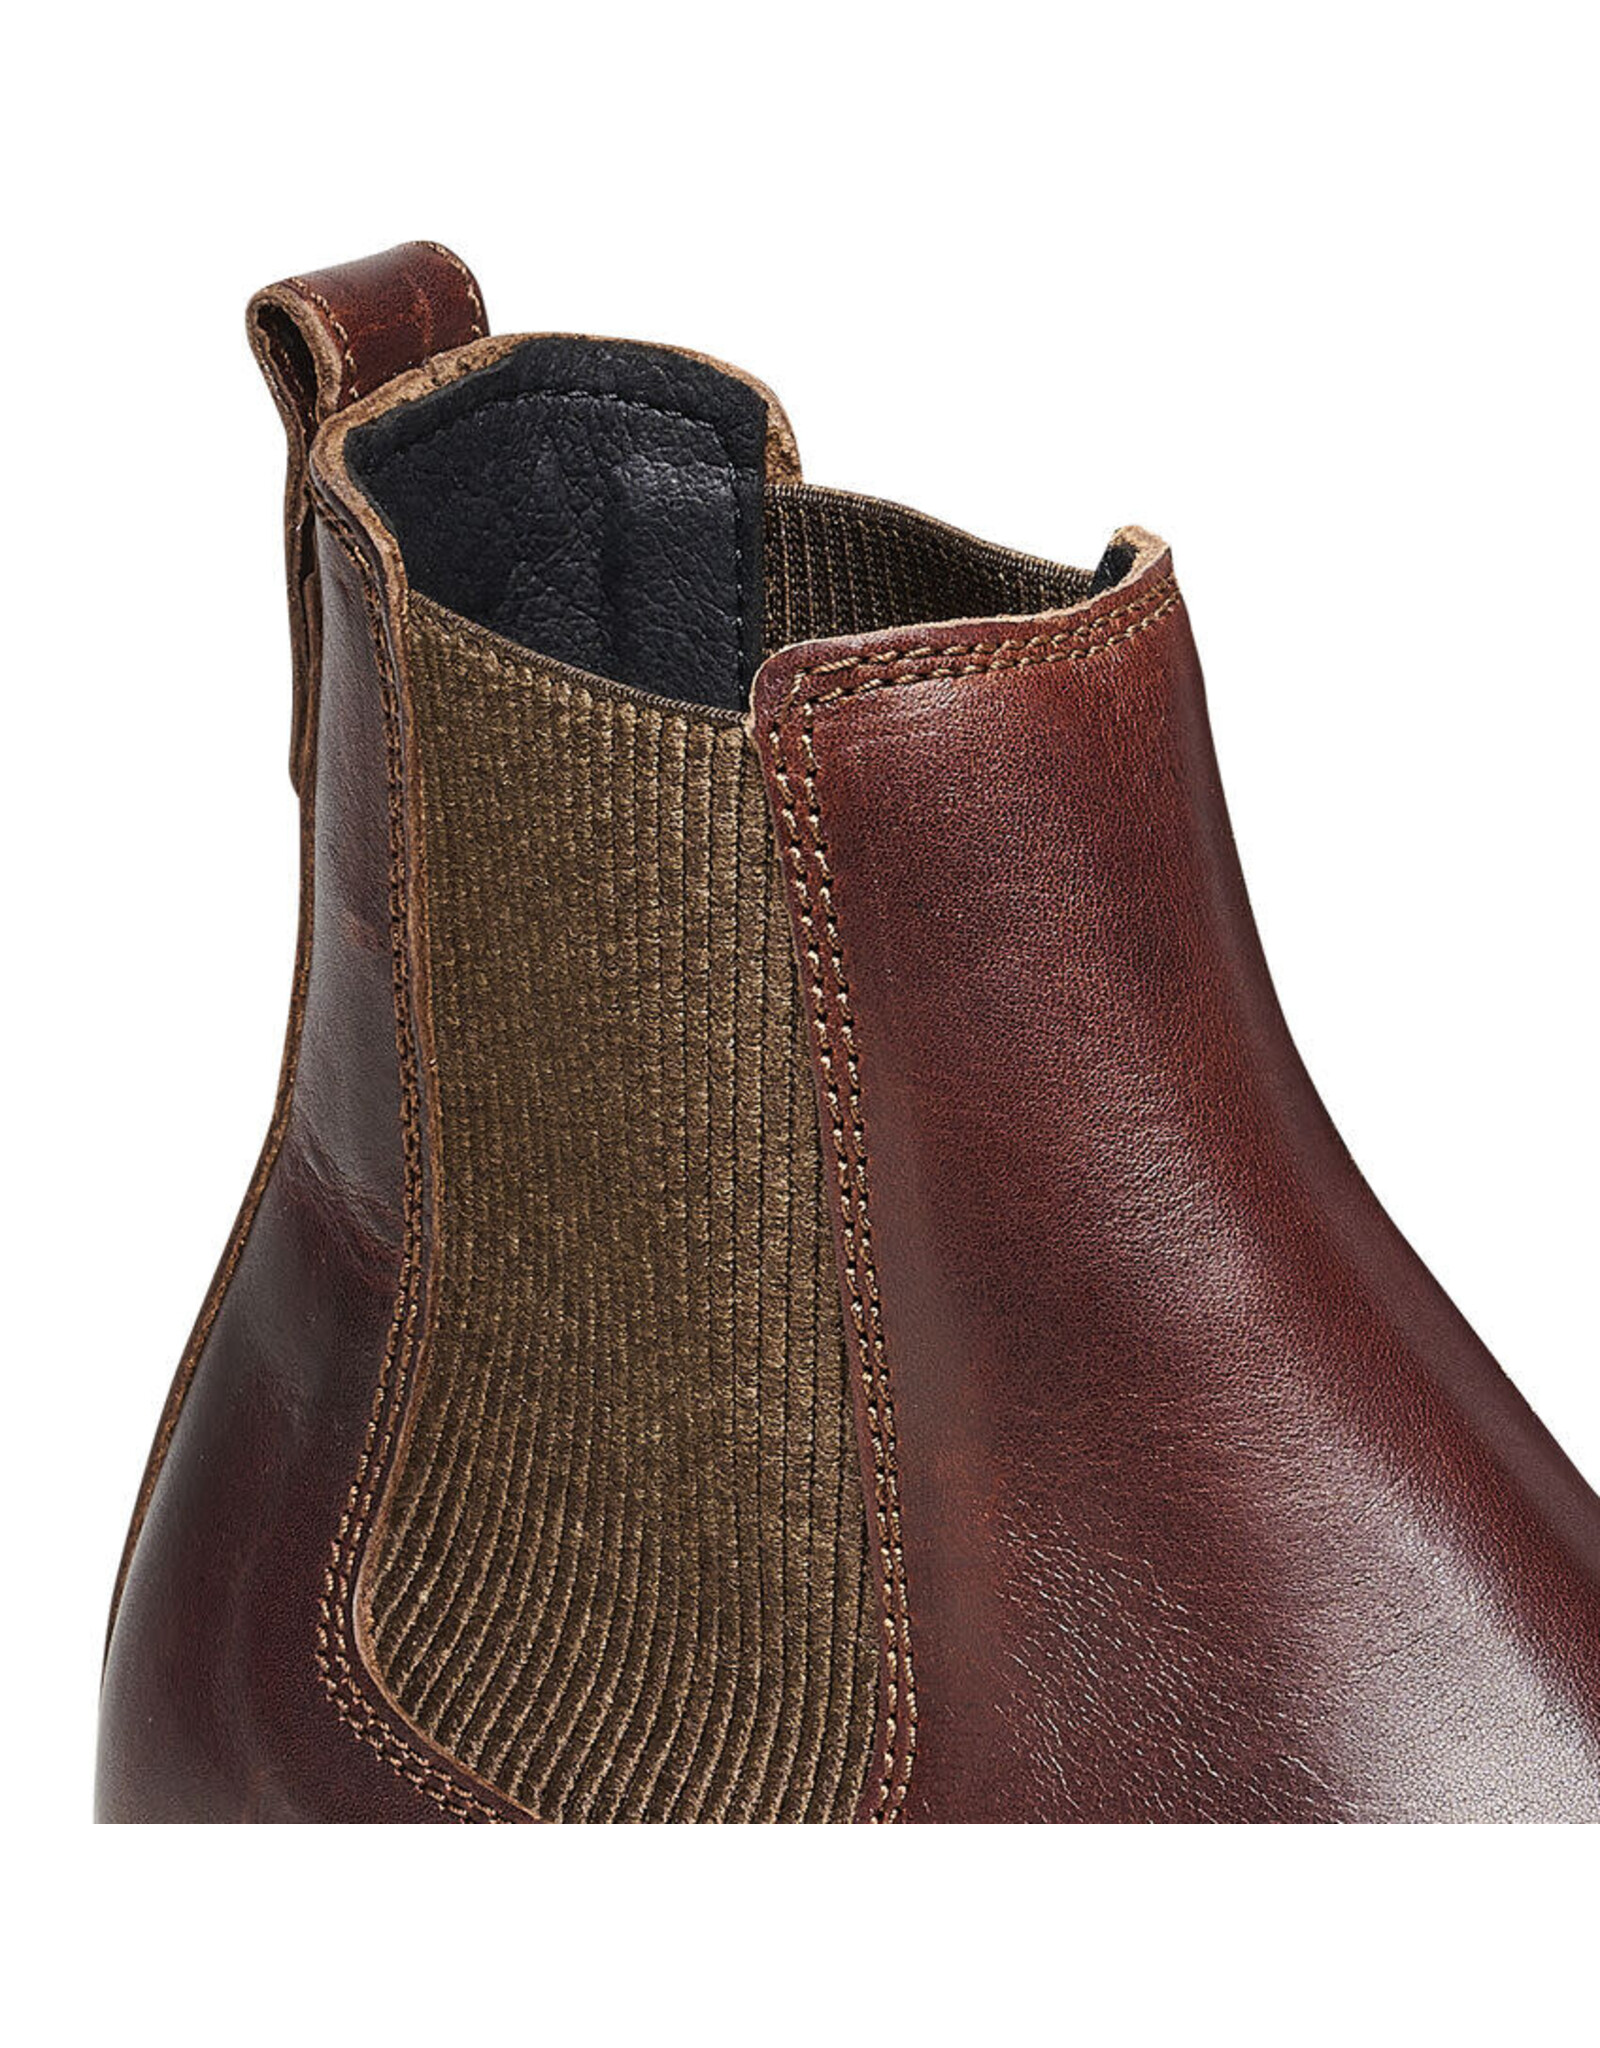 Birkenstock Highwood Slip On Leather Boot